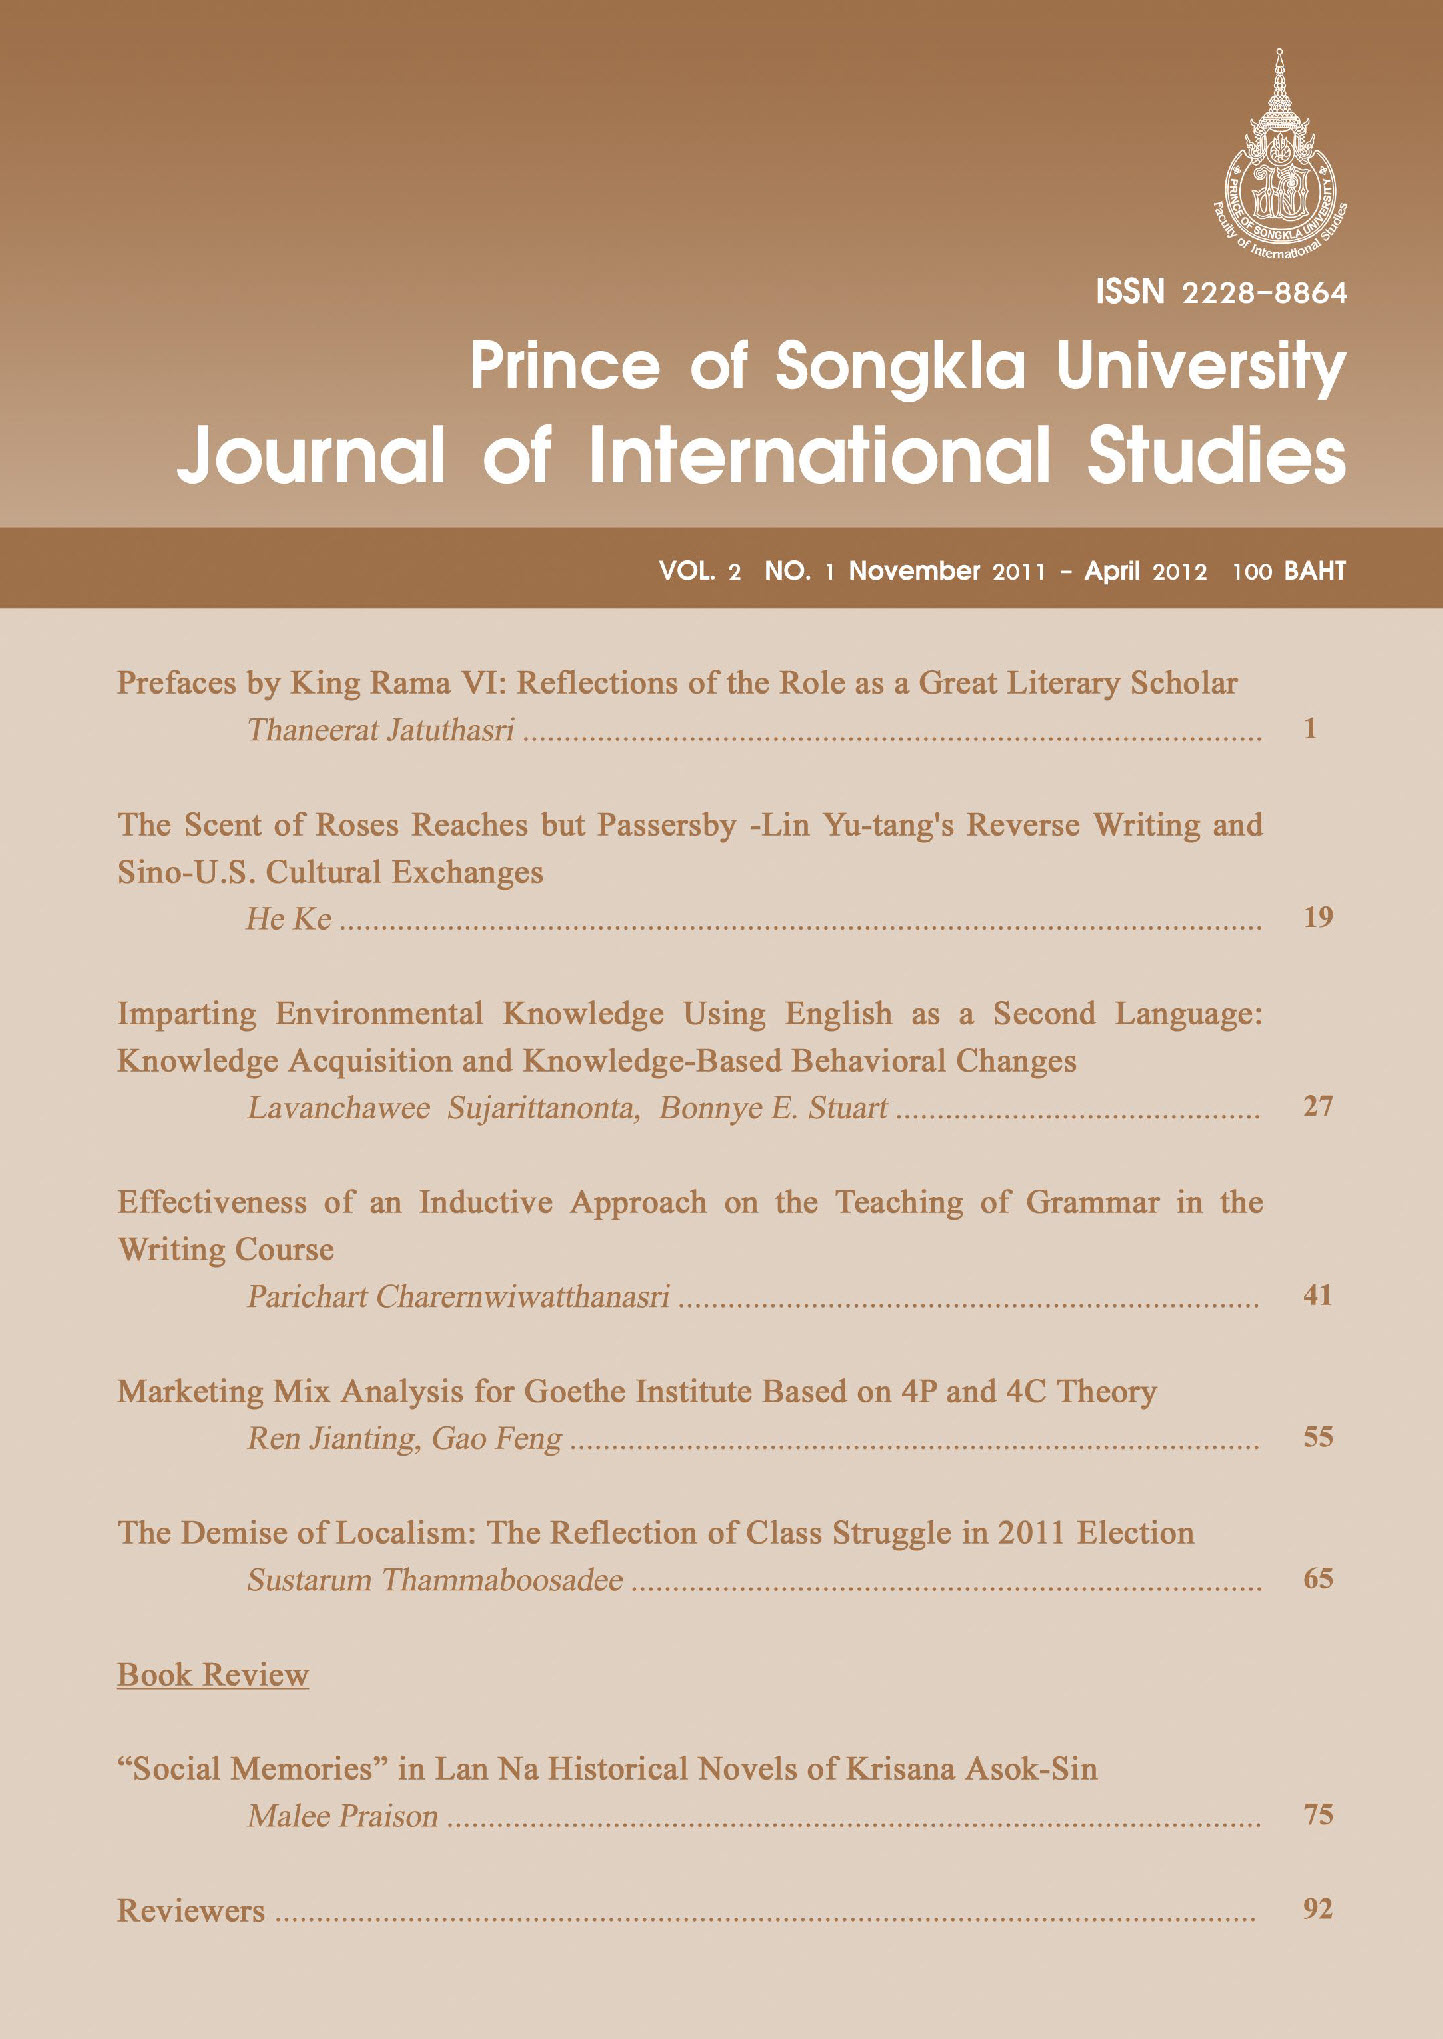 Marketing Mix Analysis Goethe Institute on 4P and 4C Theory Journal of International Prince of Songkla University